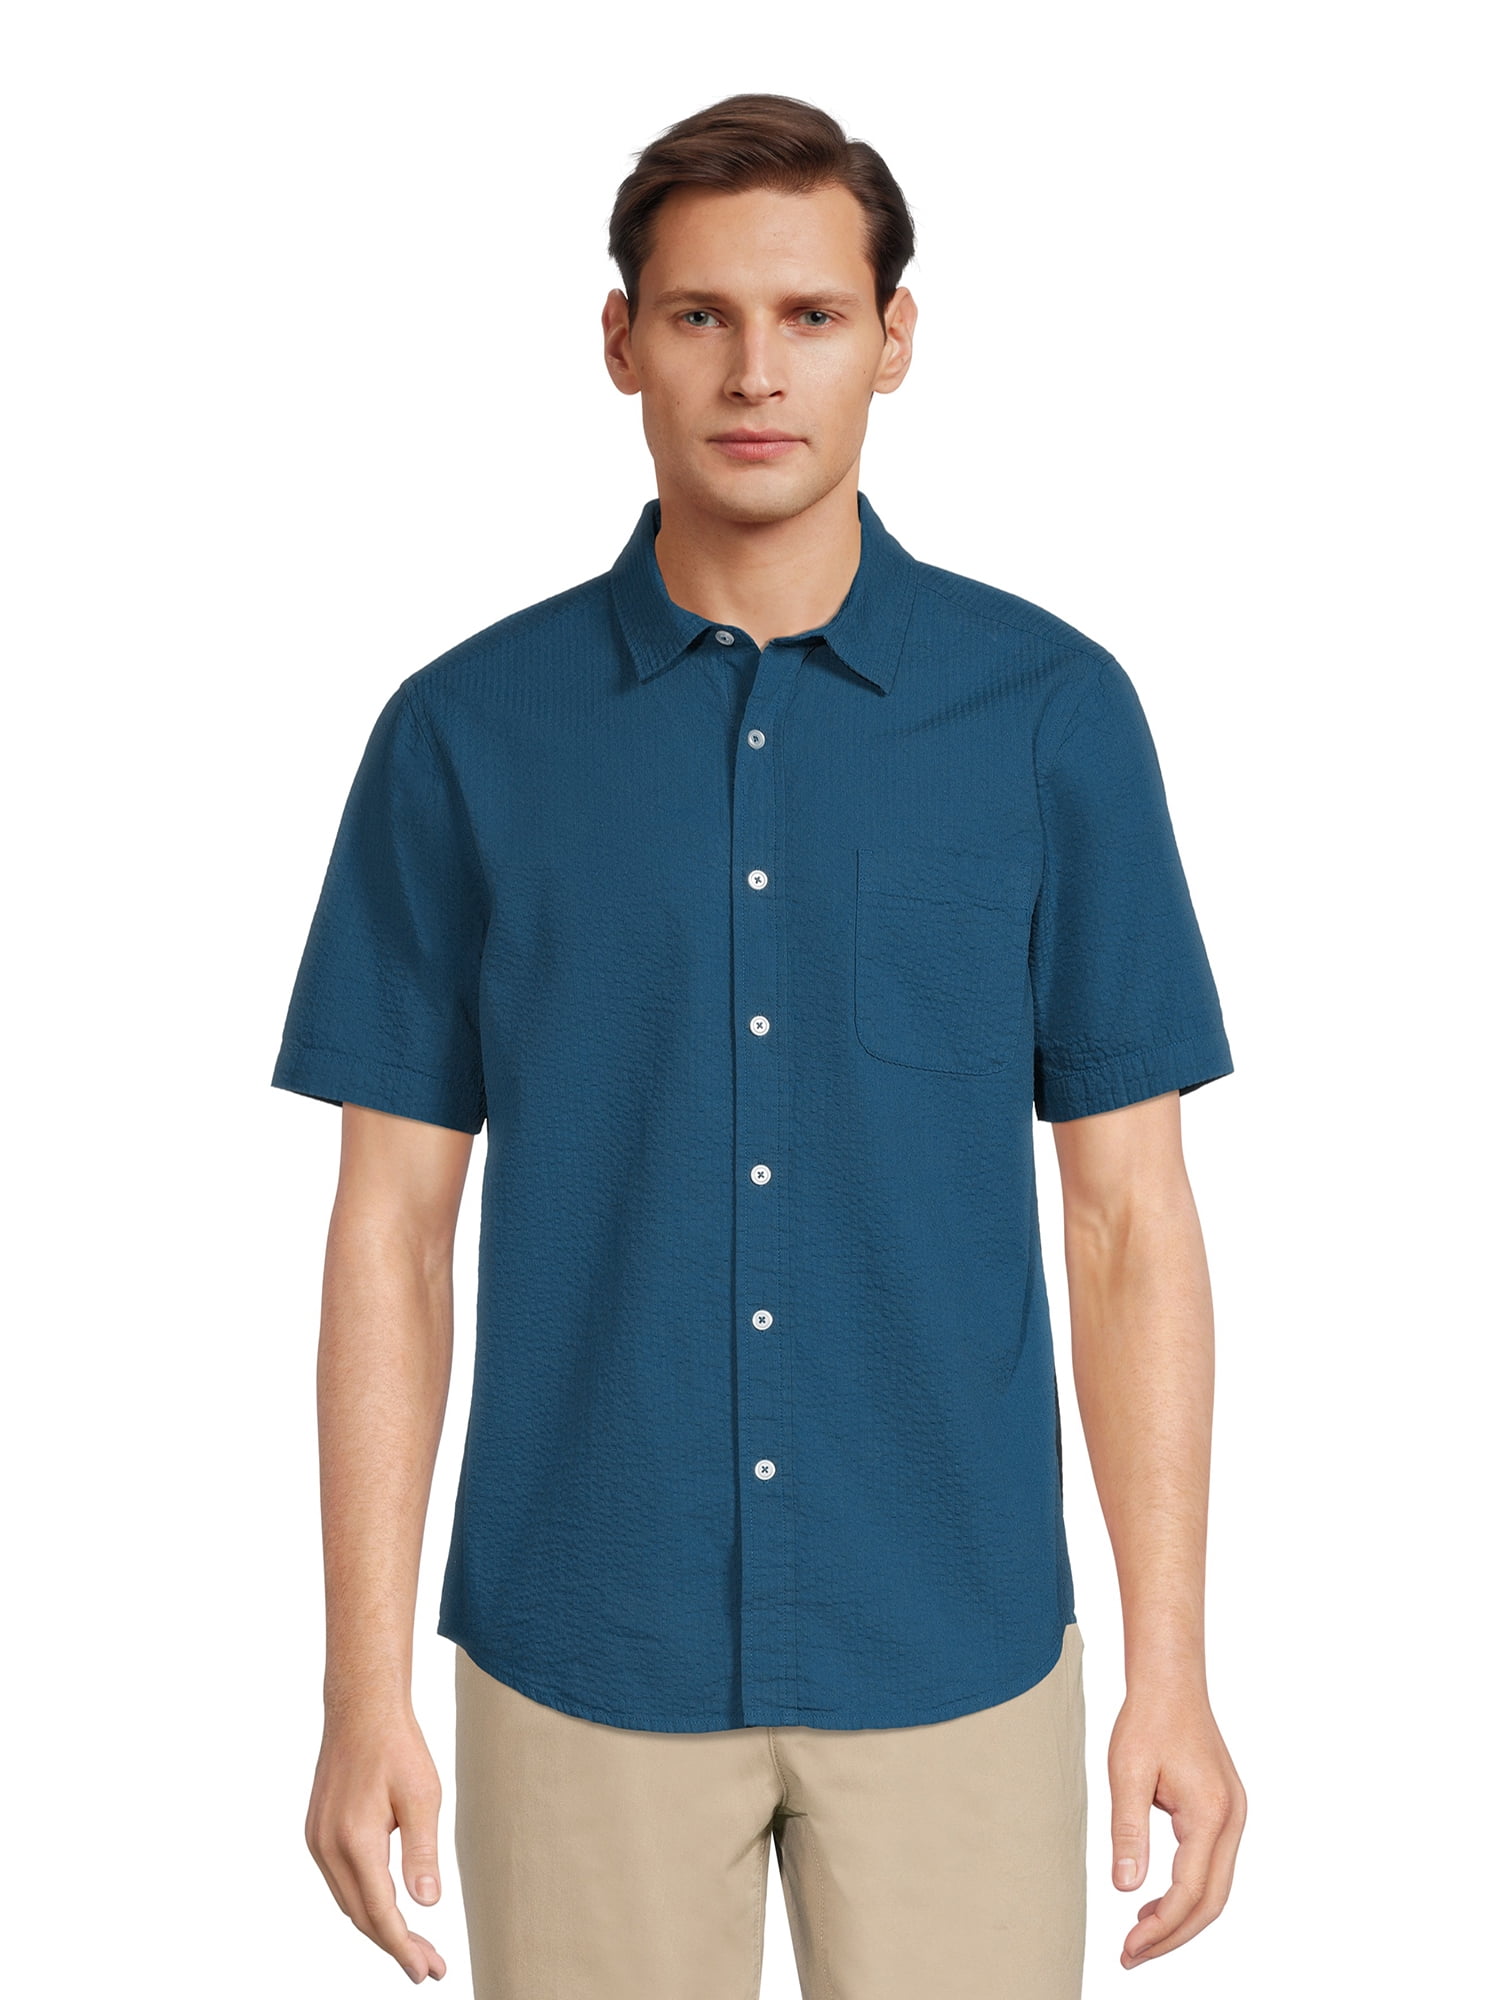 George Men's Seersucker Button Up Shirt with Short Sleeves - Walmart.com